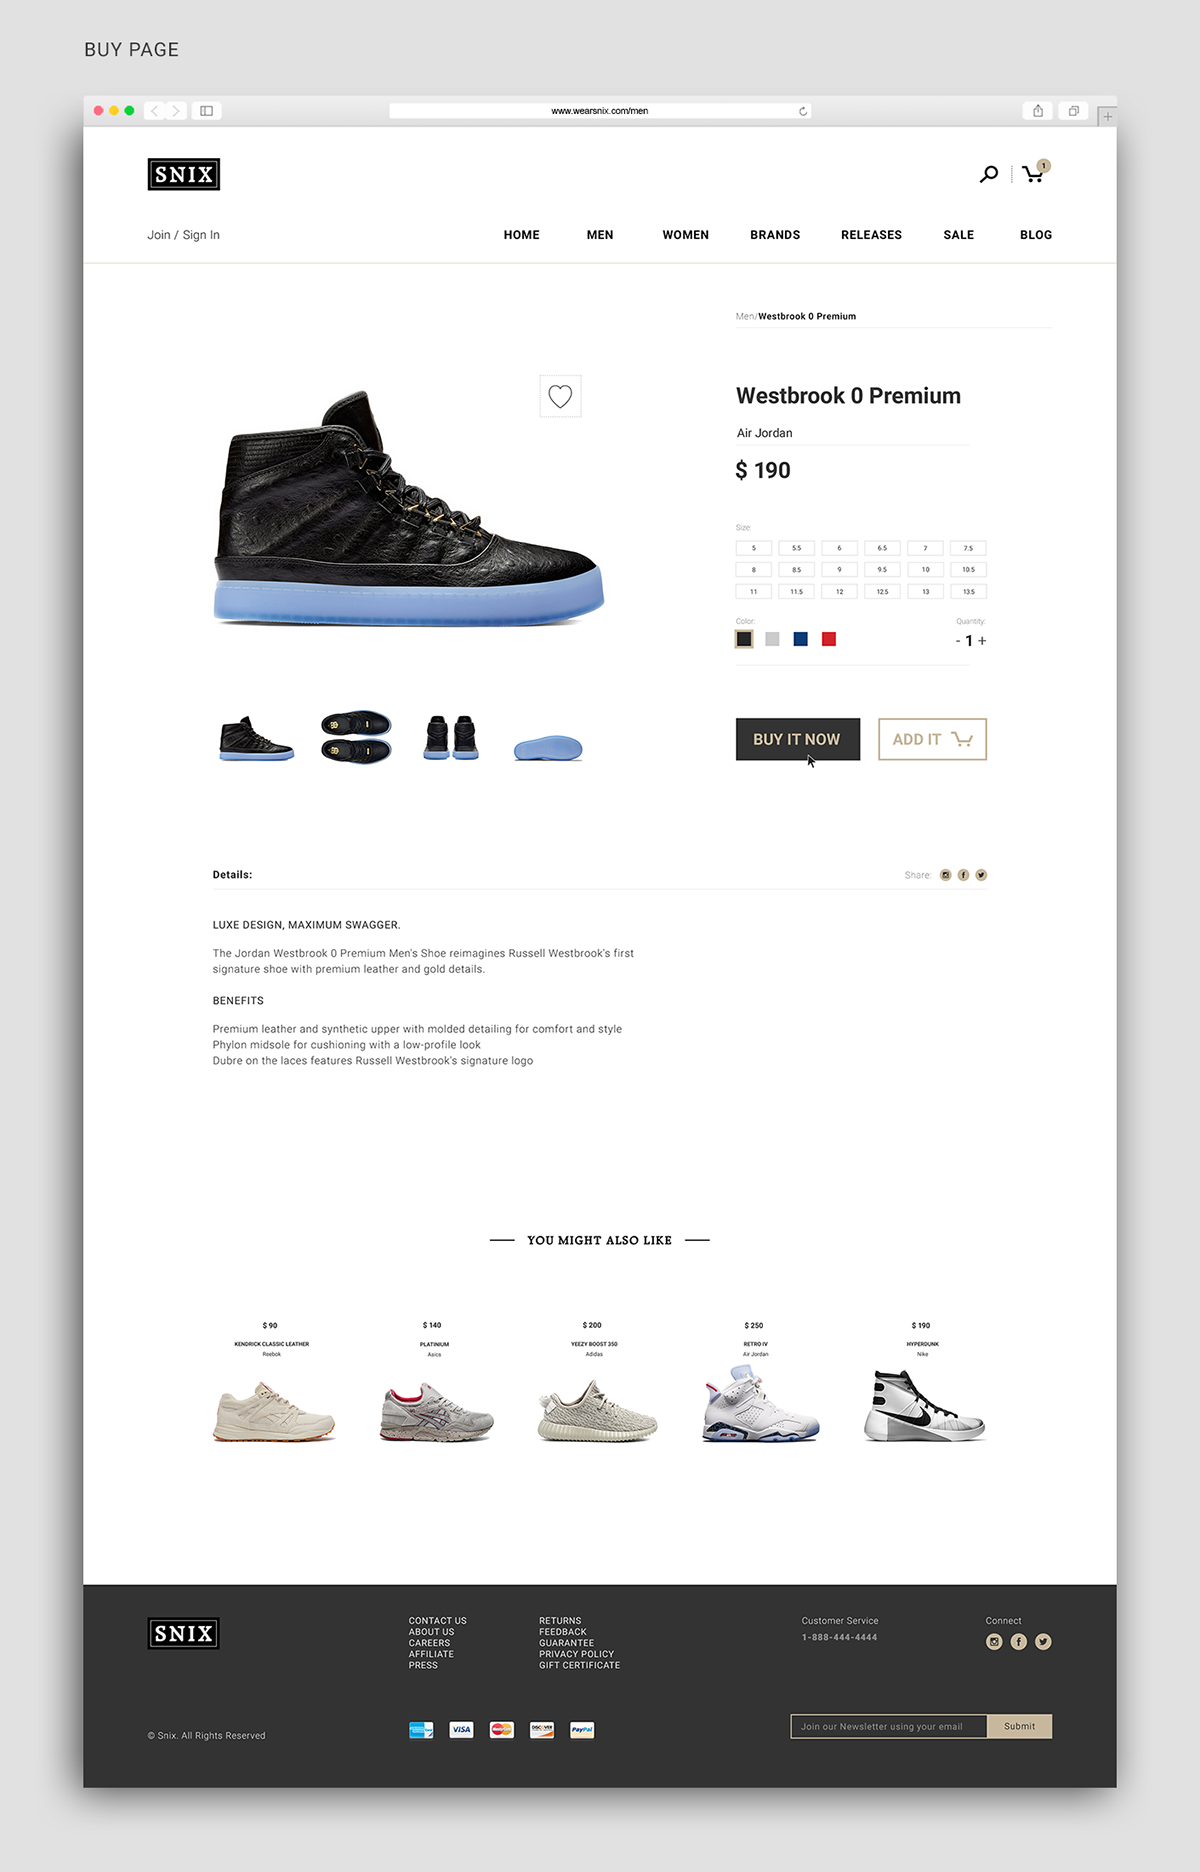 Adobe Portfolio Snix sneakerheads e-commerce